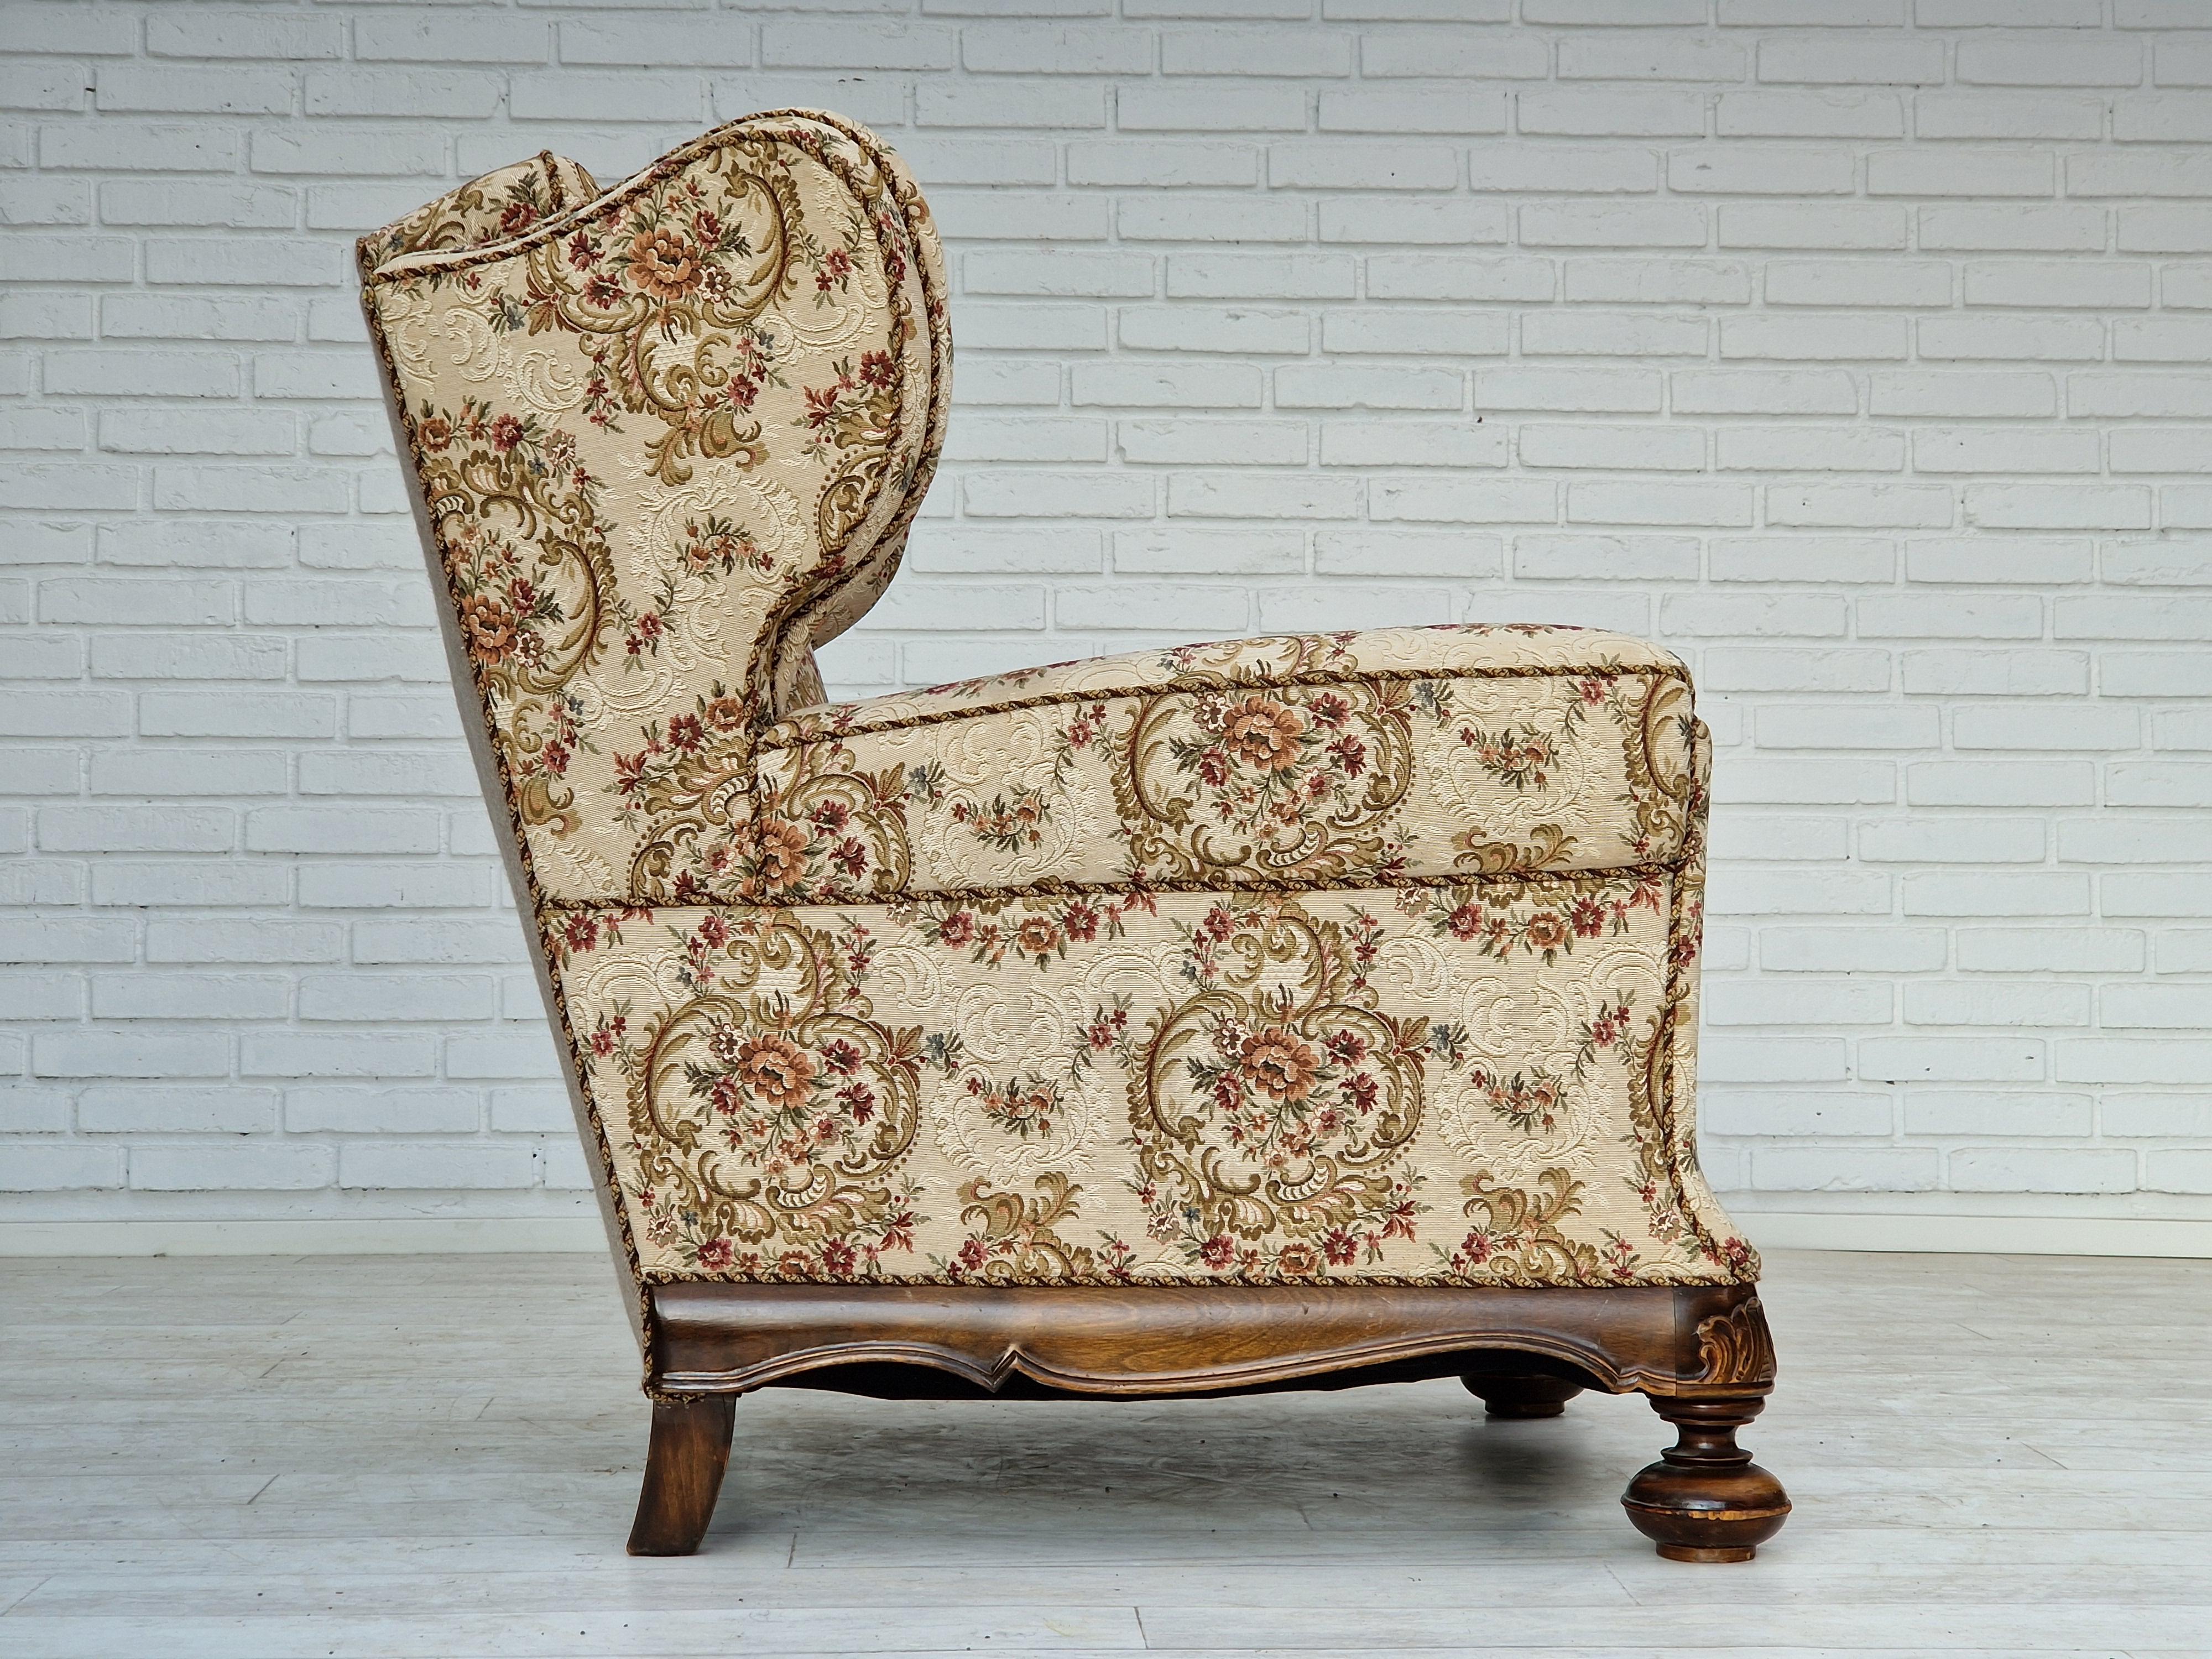 Scandinavian Modern 1950s, Danish vintage relax chair in 